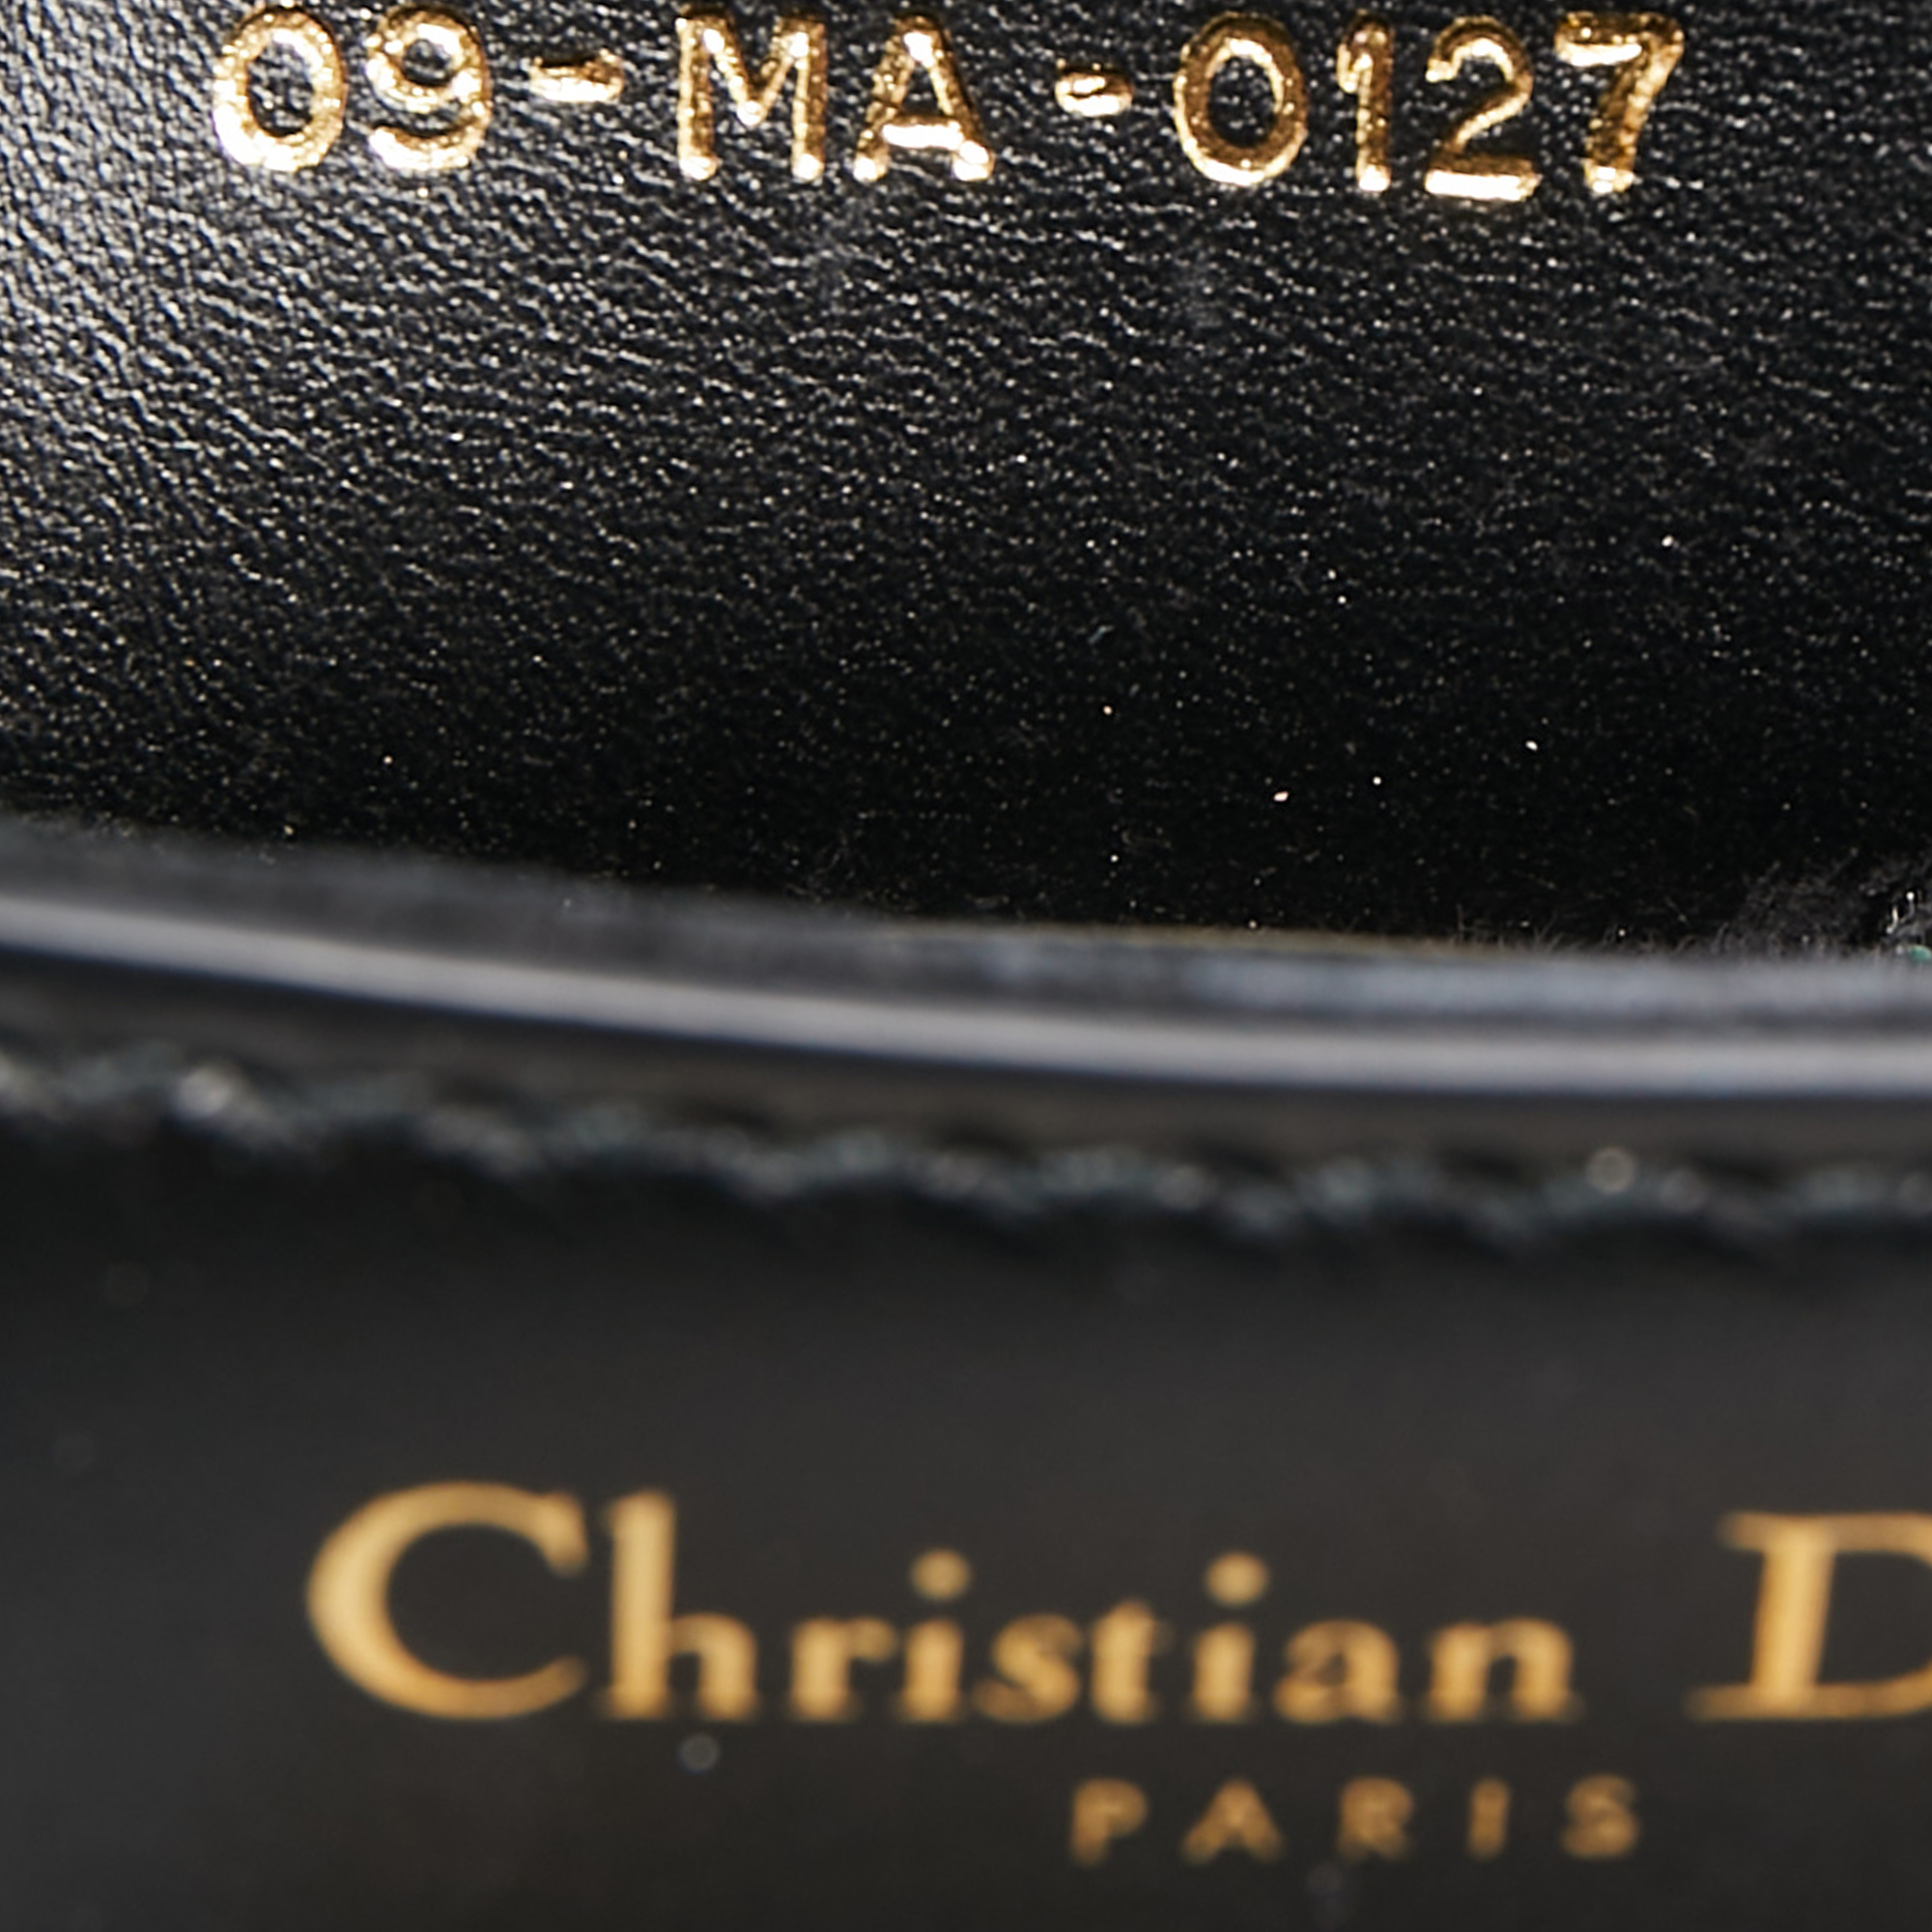 Dior Black Leather Mini D-Fence Saddle Bag